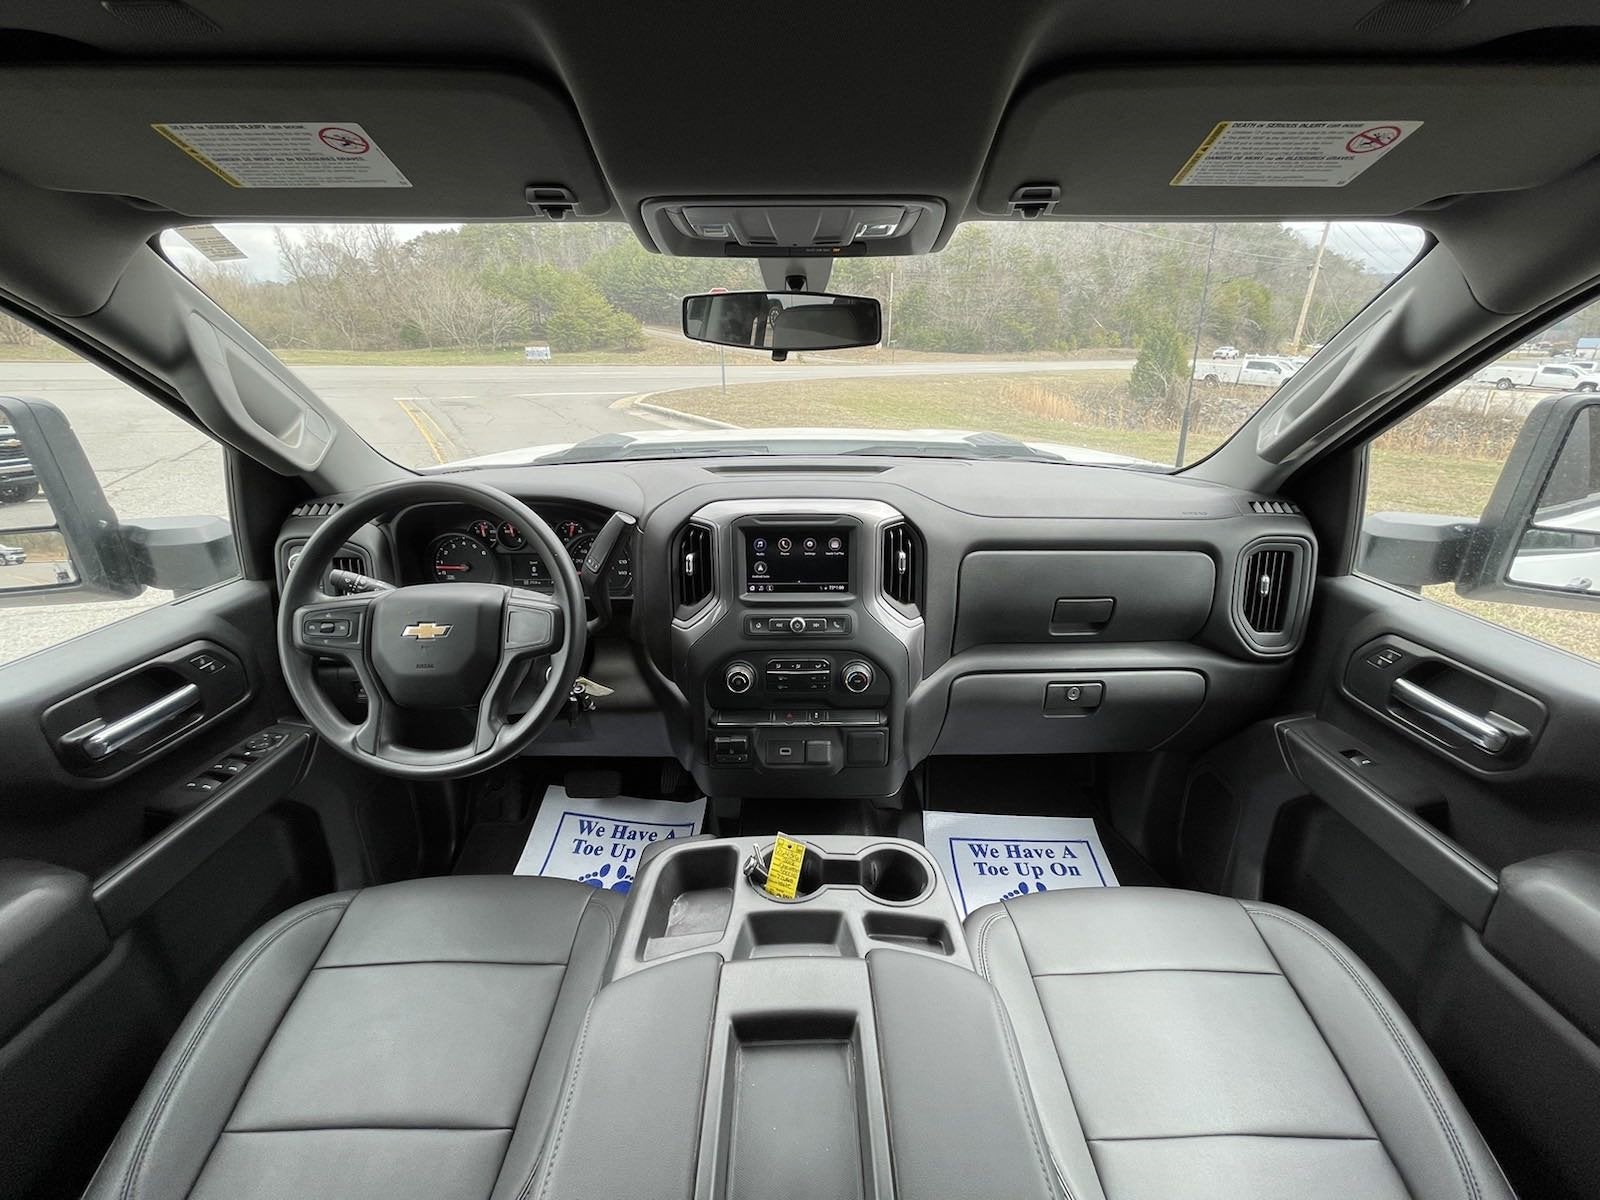 2020 Chevrolet Silverado 3500 HD Chassis Cab Work Truck